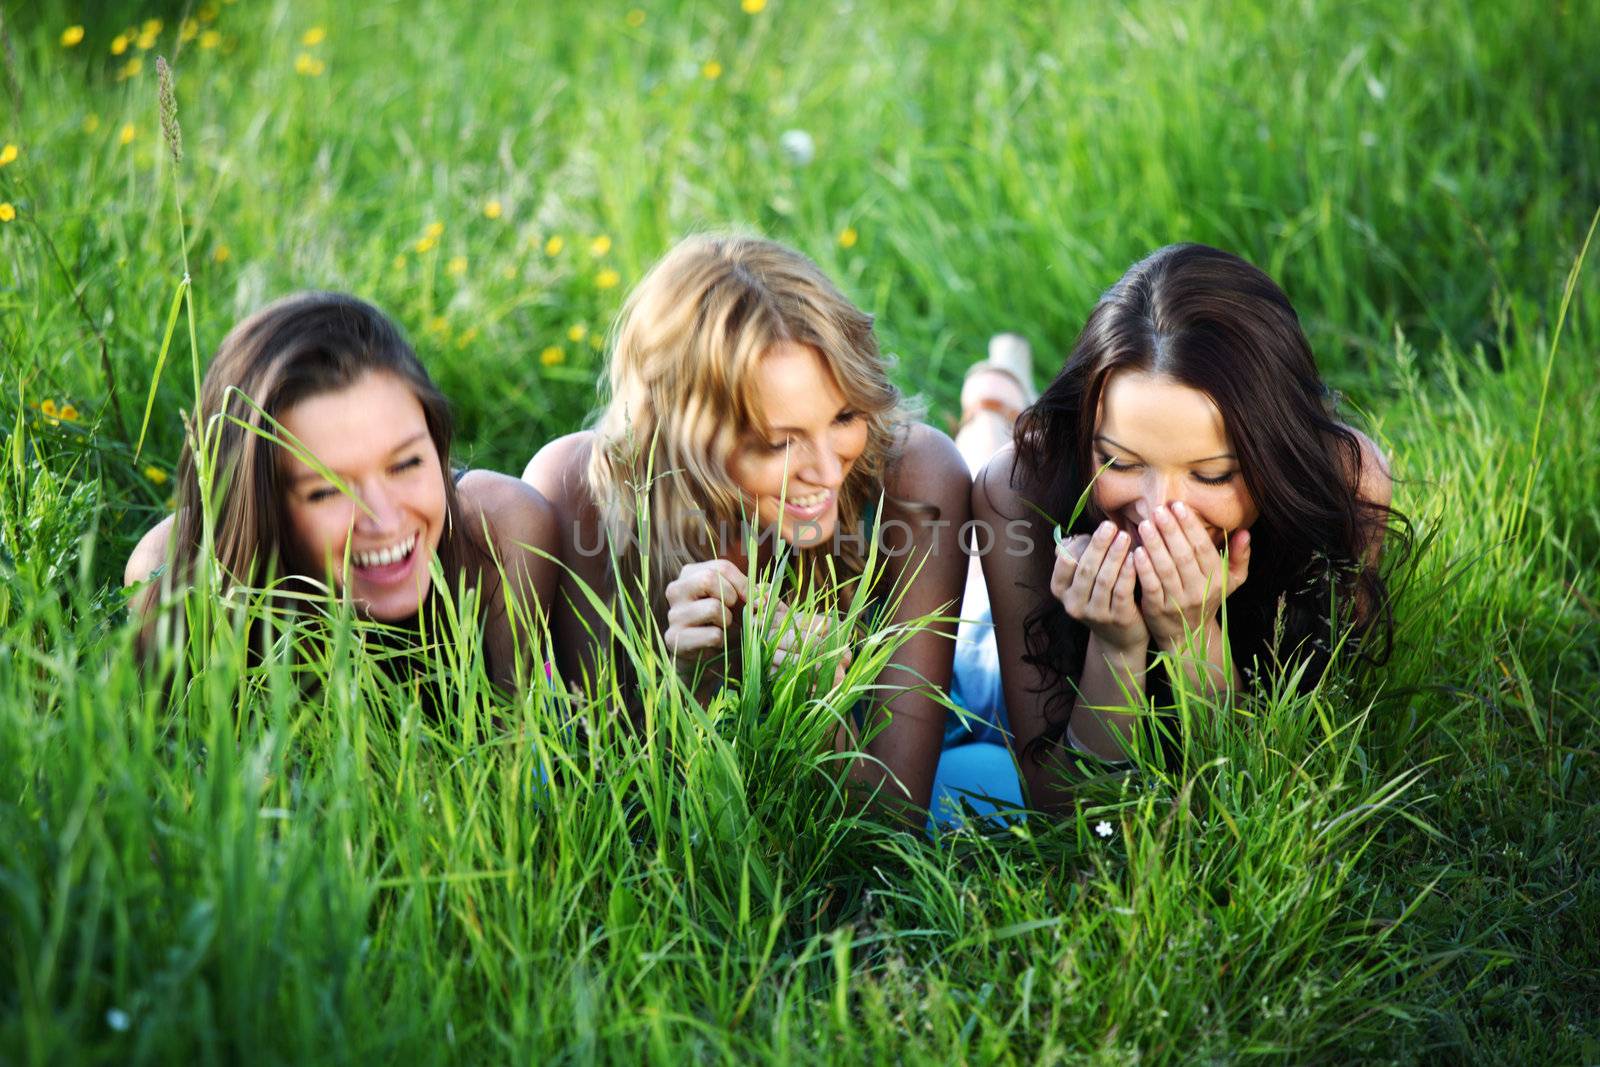 women grass fun by Yellowj